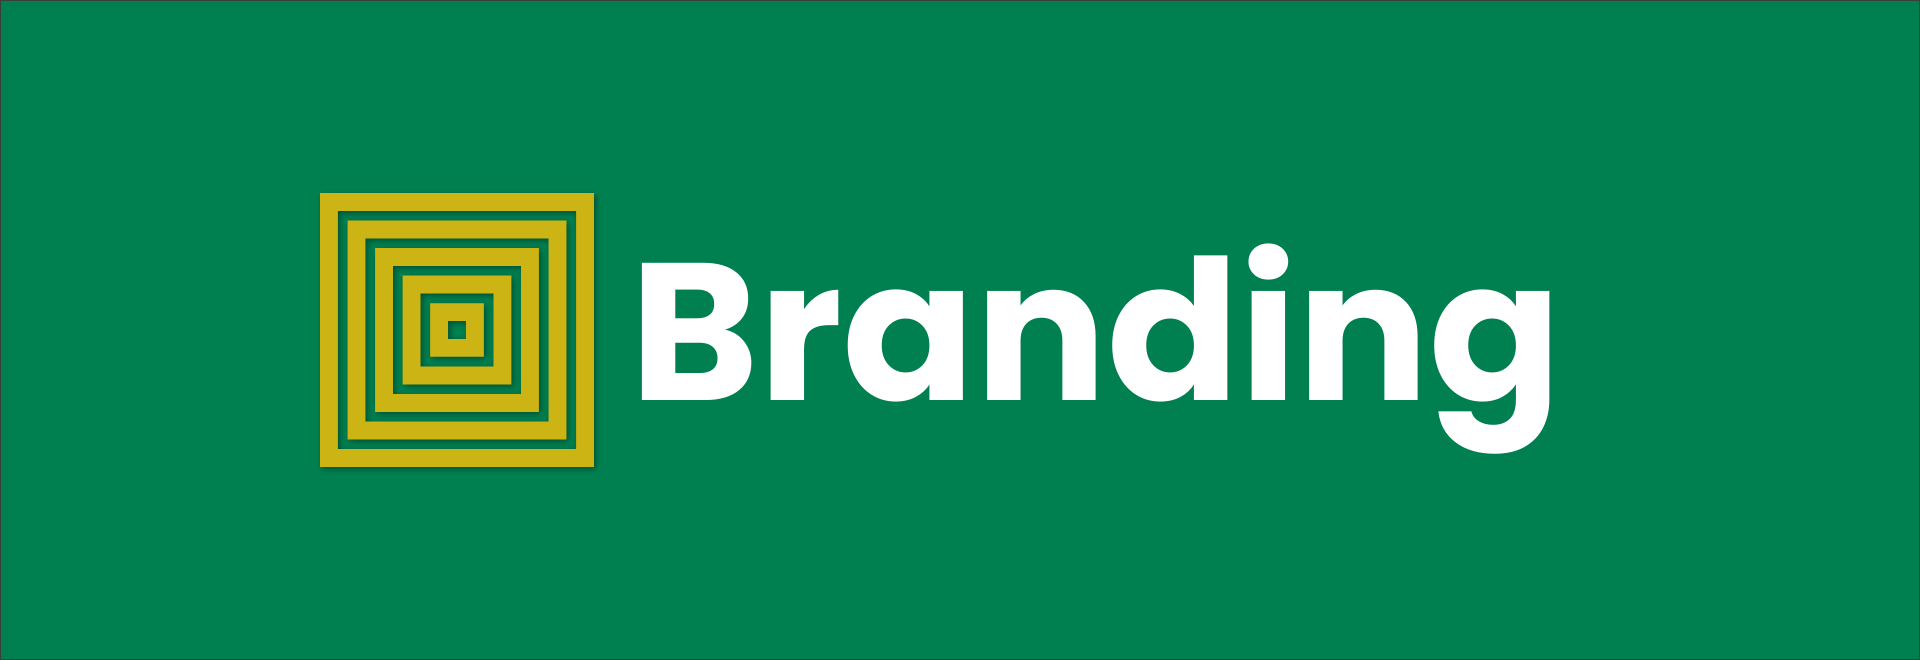 Corporate branding services Kolkata